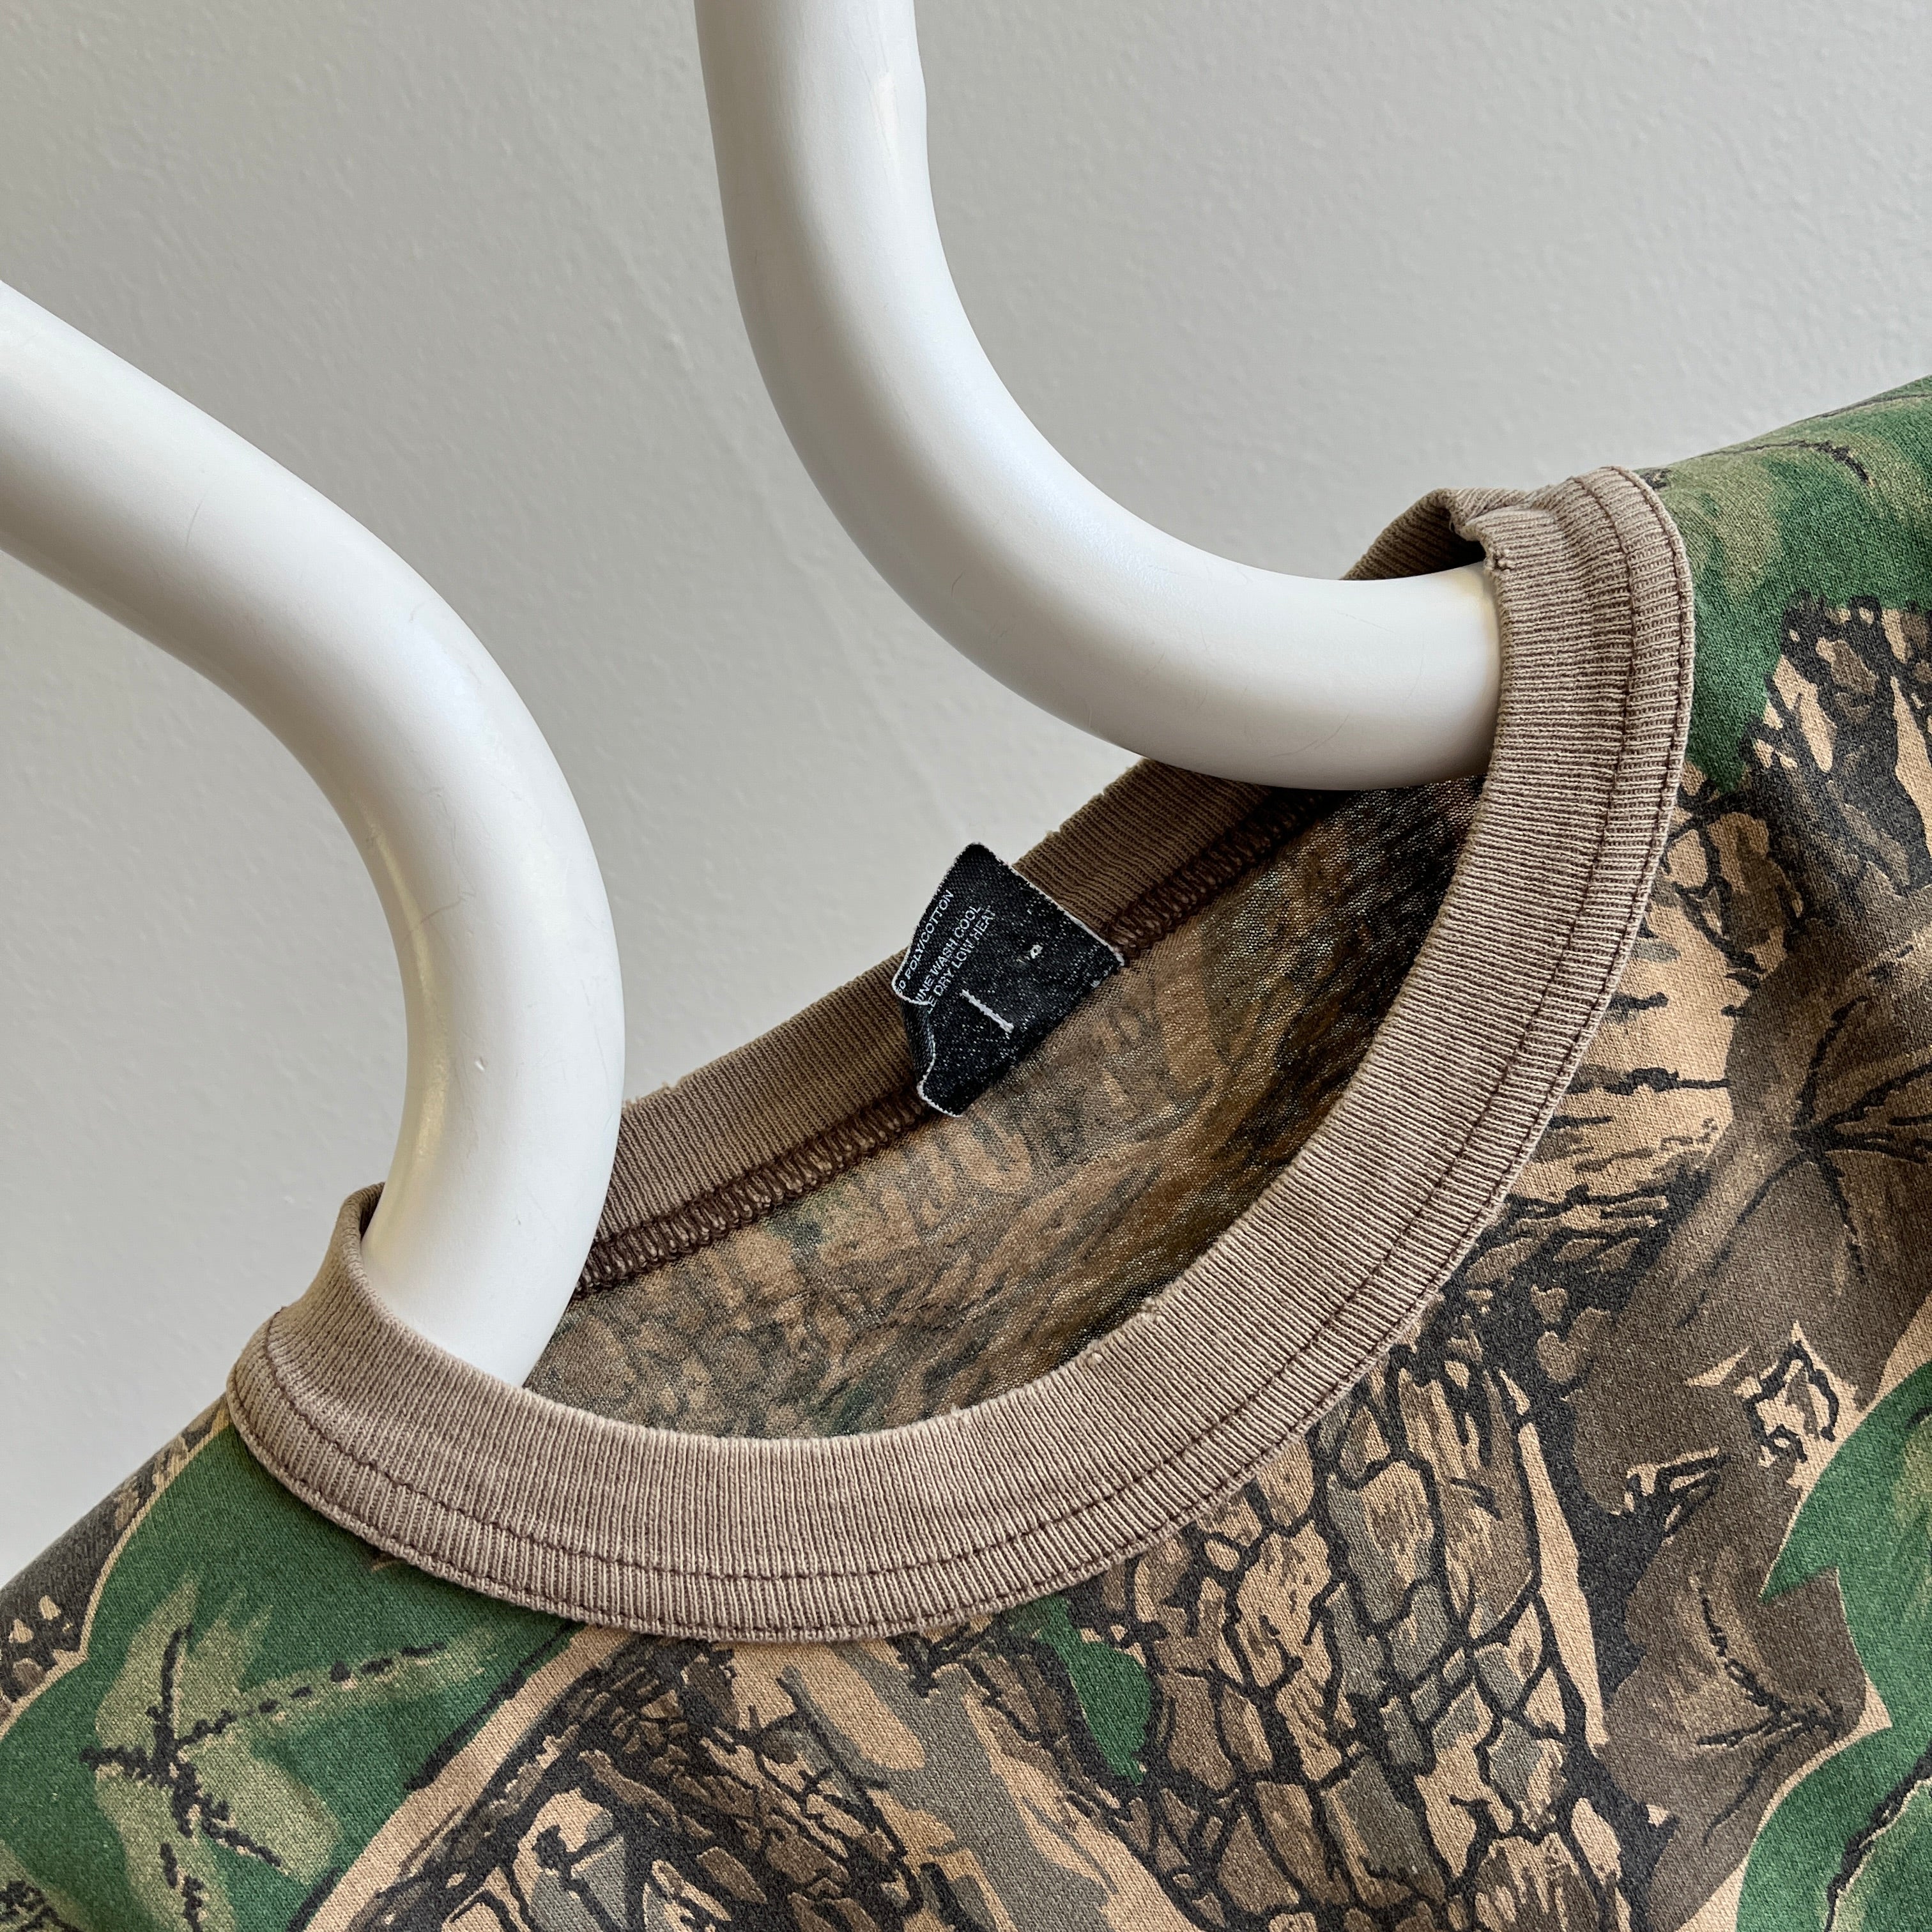 1980s Rebark Hunting Camo Long Sleeve T-Shirt with Holes on Backside